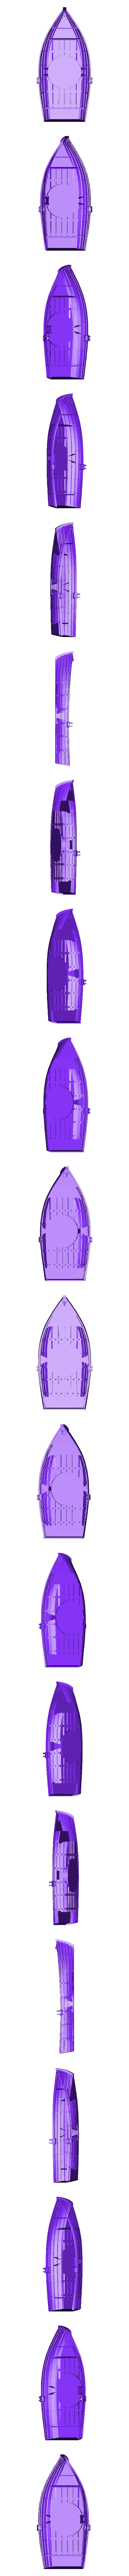 Row_Boat.PrintVariation1_FDM.RowBoatOneSeater.Part_2.stl Download STL file Row Boat • 3D printable model, TableTopMinis